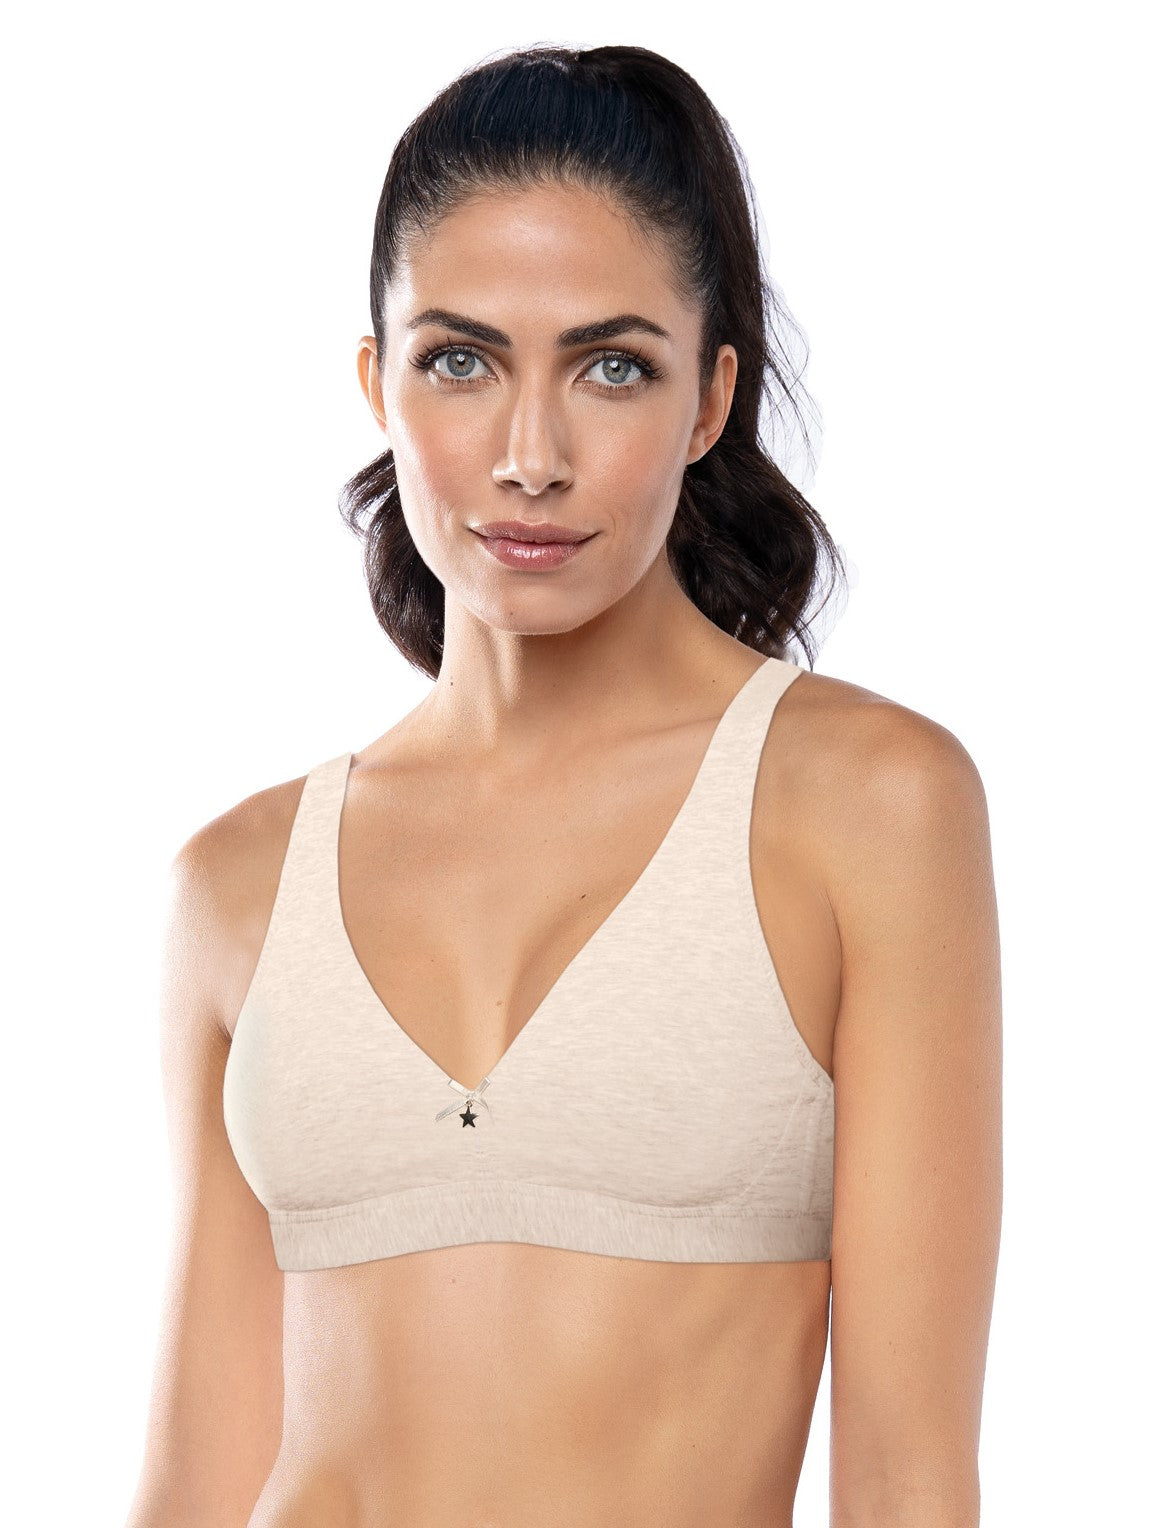 Women's organic cotton bras  Shop organic bras for women from